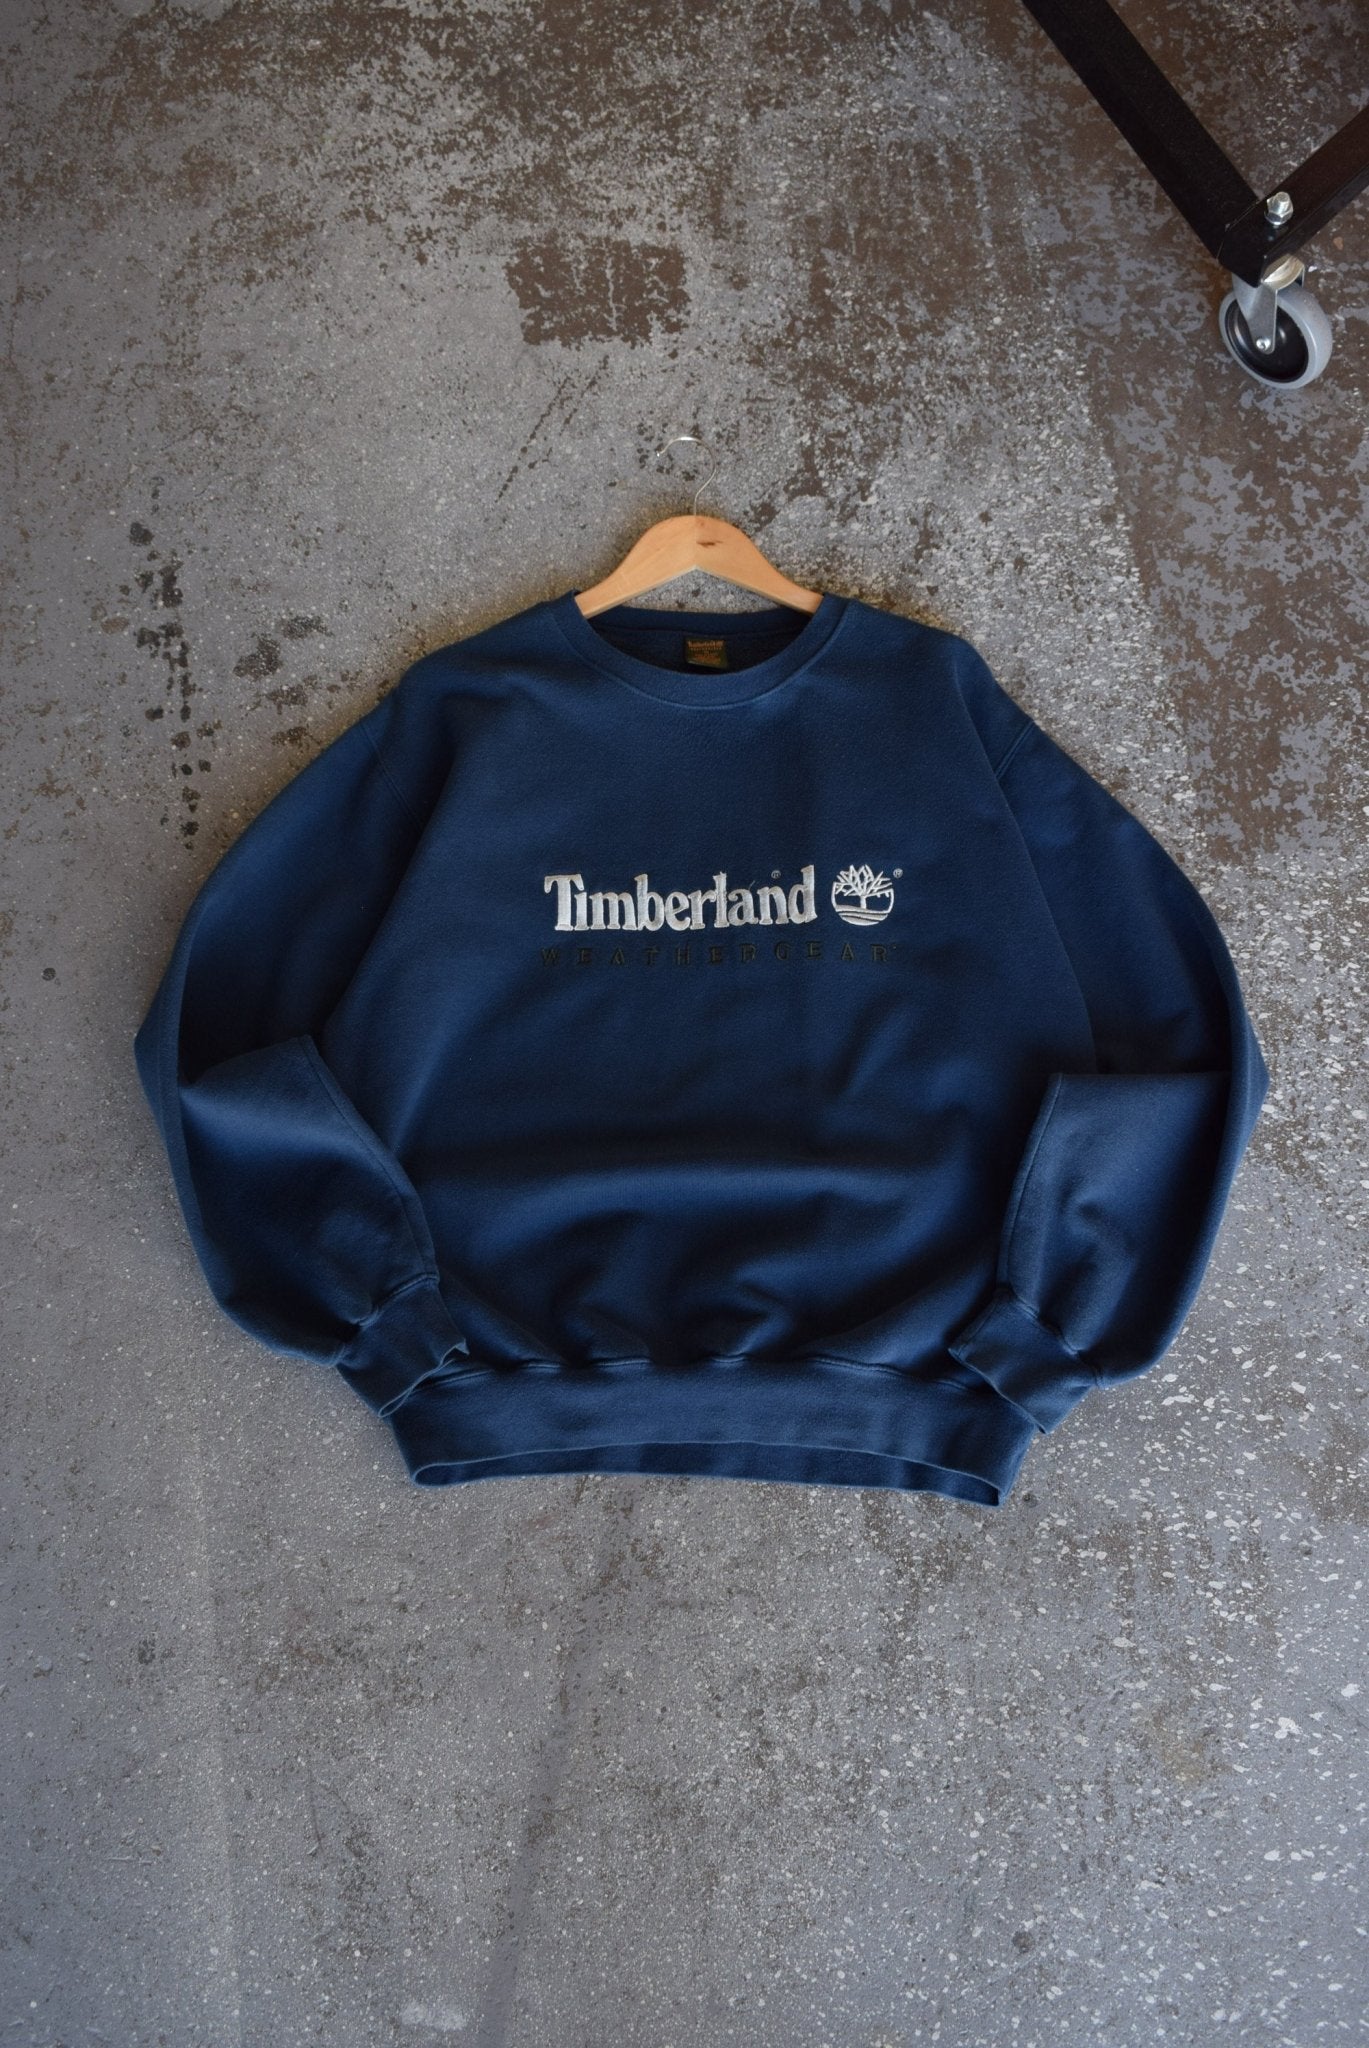 Vintage Timberland Weathergear Spellout Embroidered Crewneck (M) - Retrospective Store